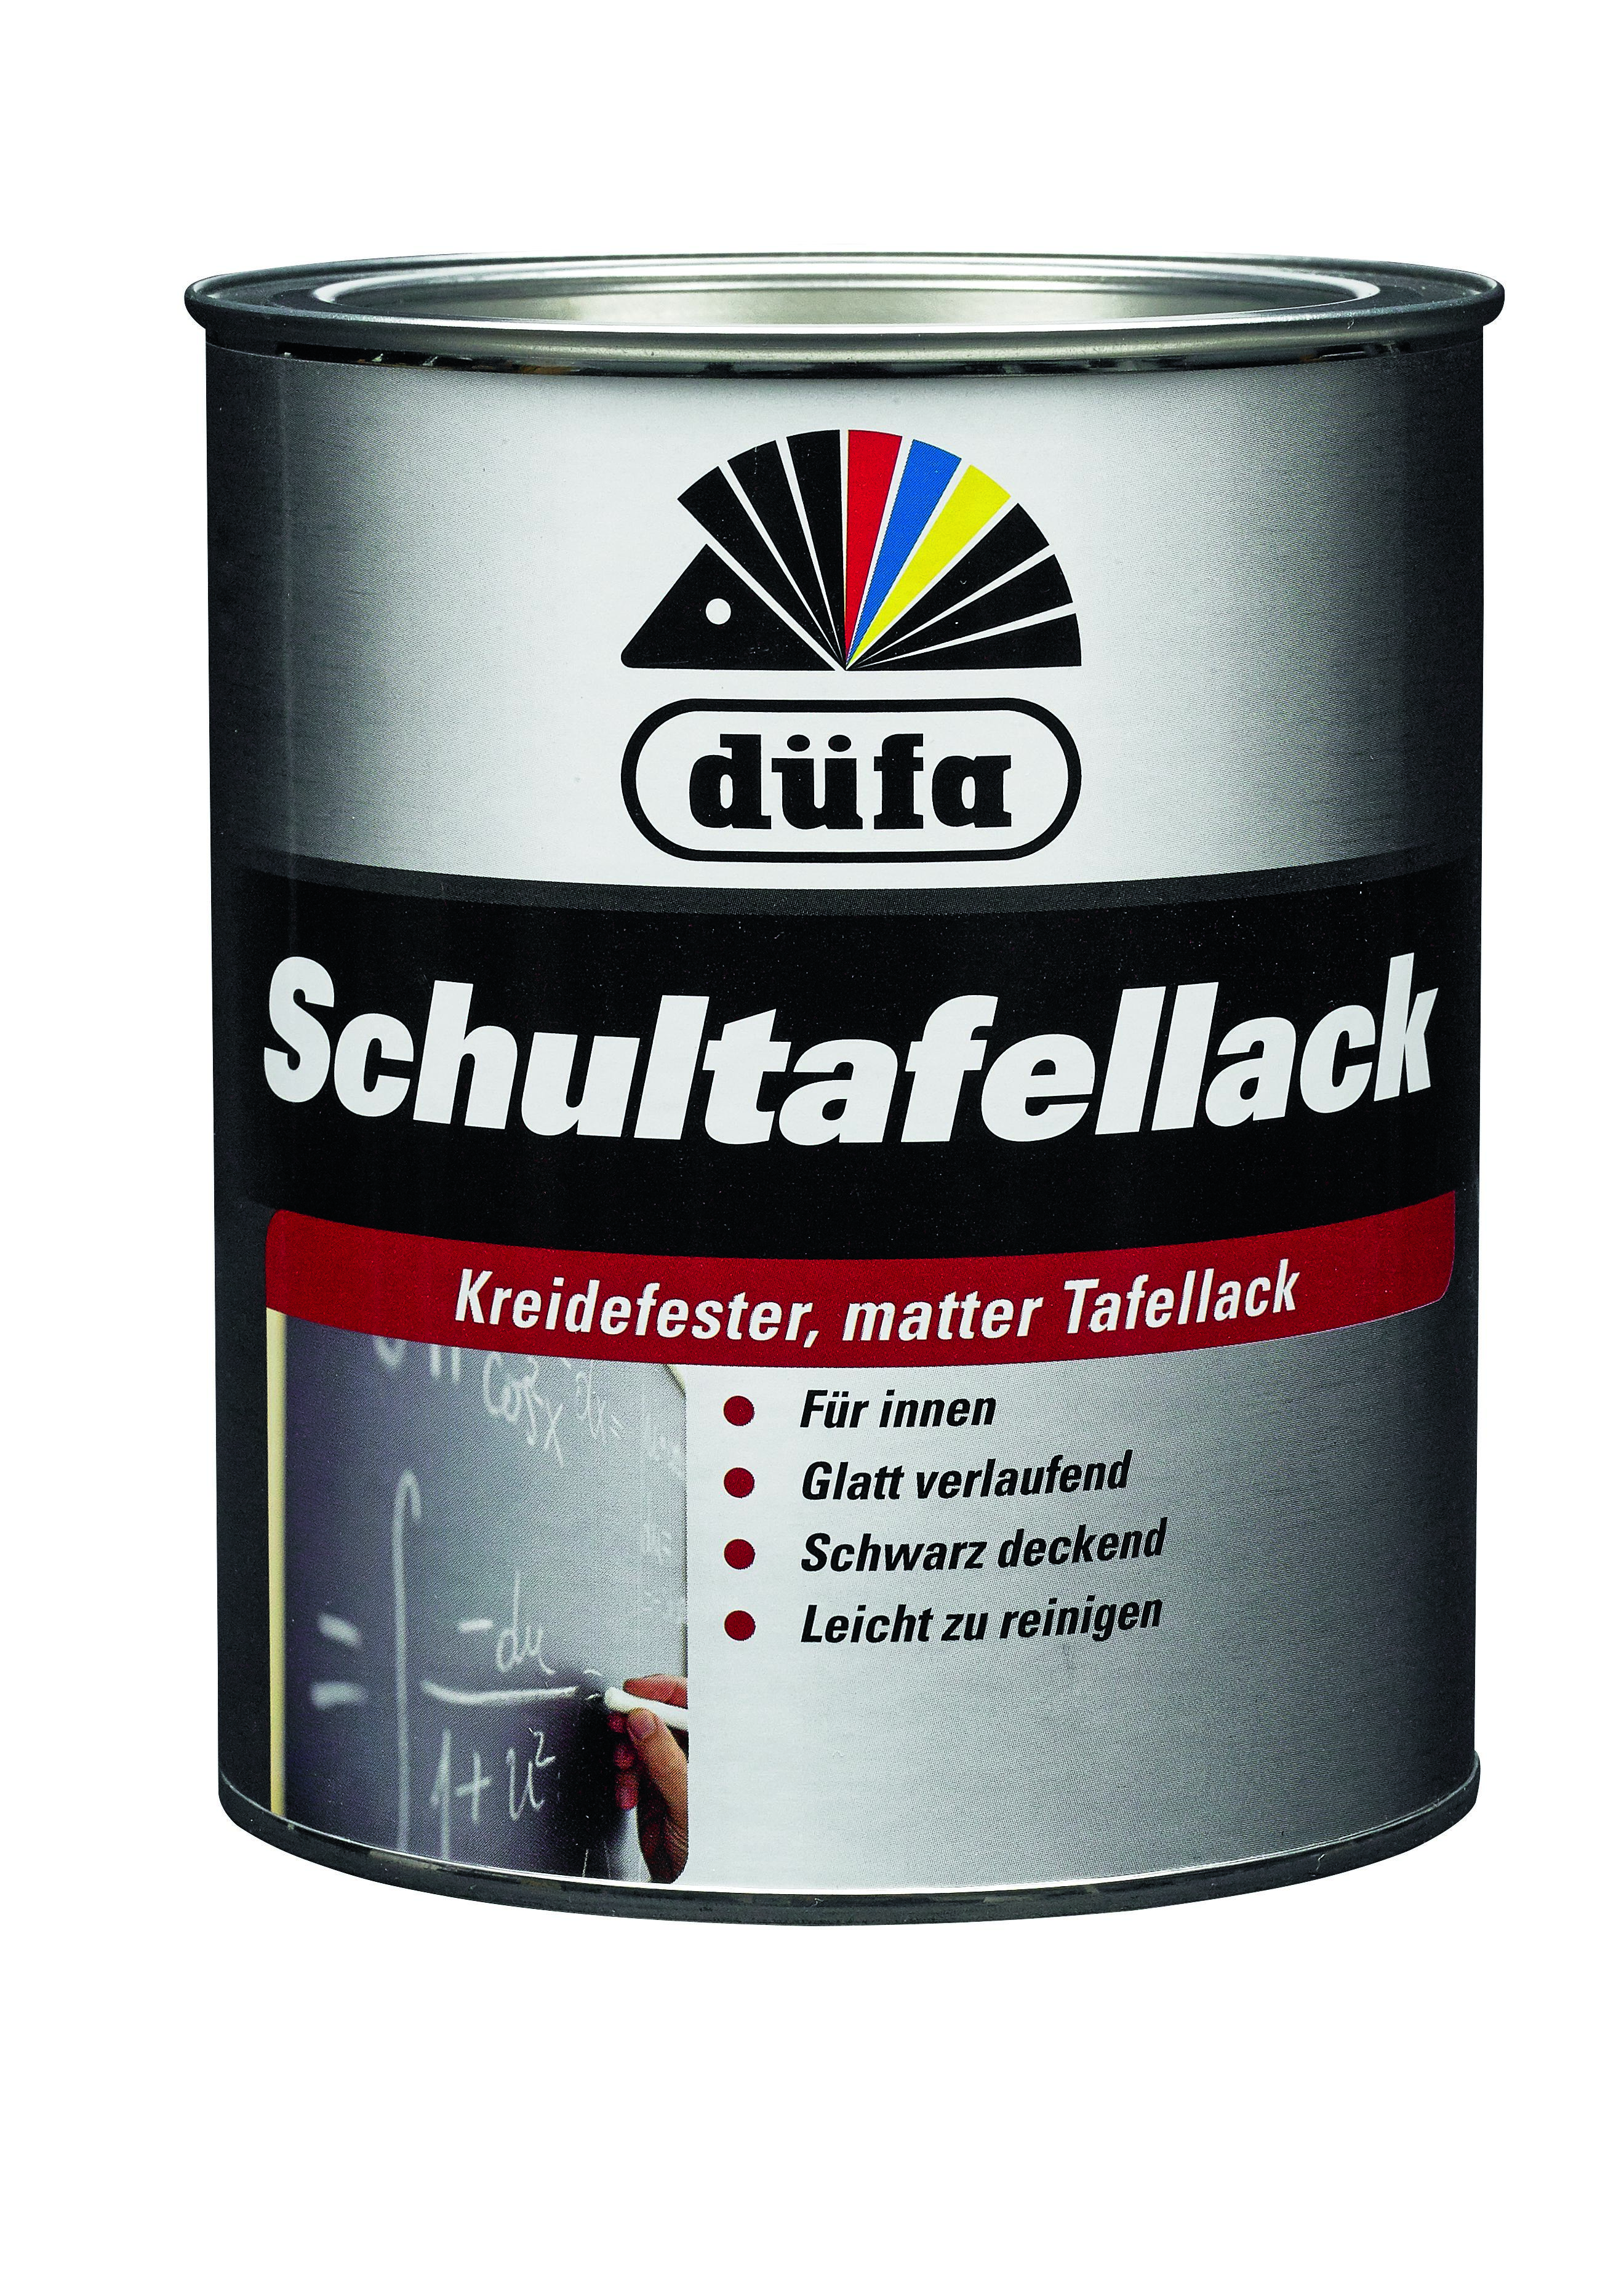 Düfa Schultafellack Schwarz, 750 ml